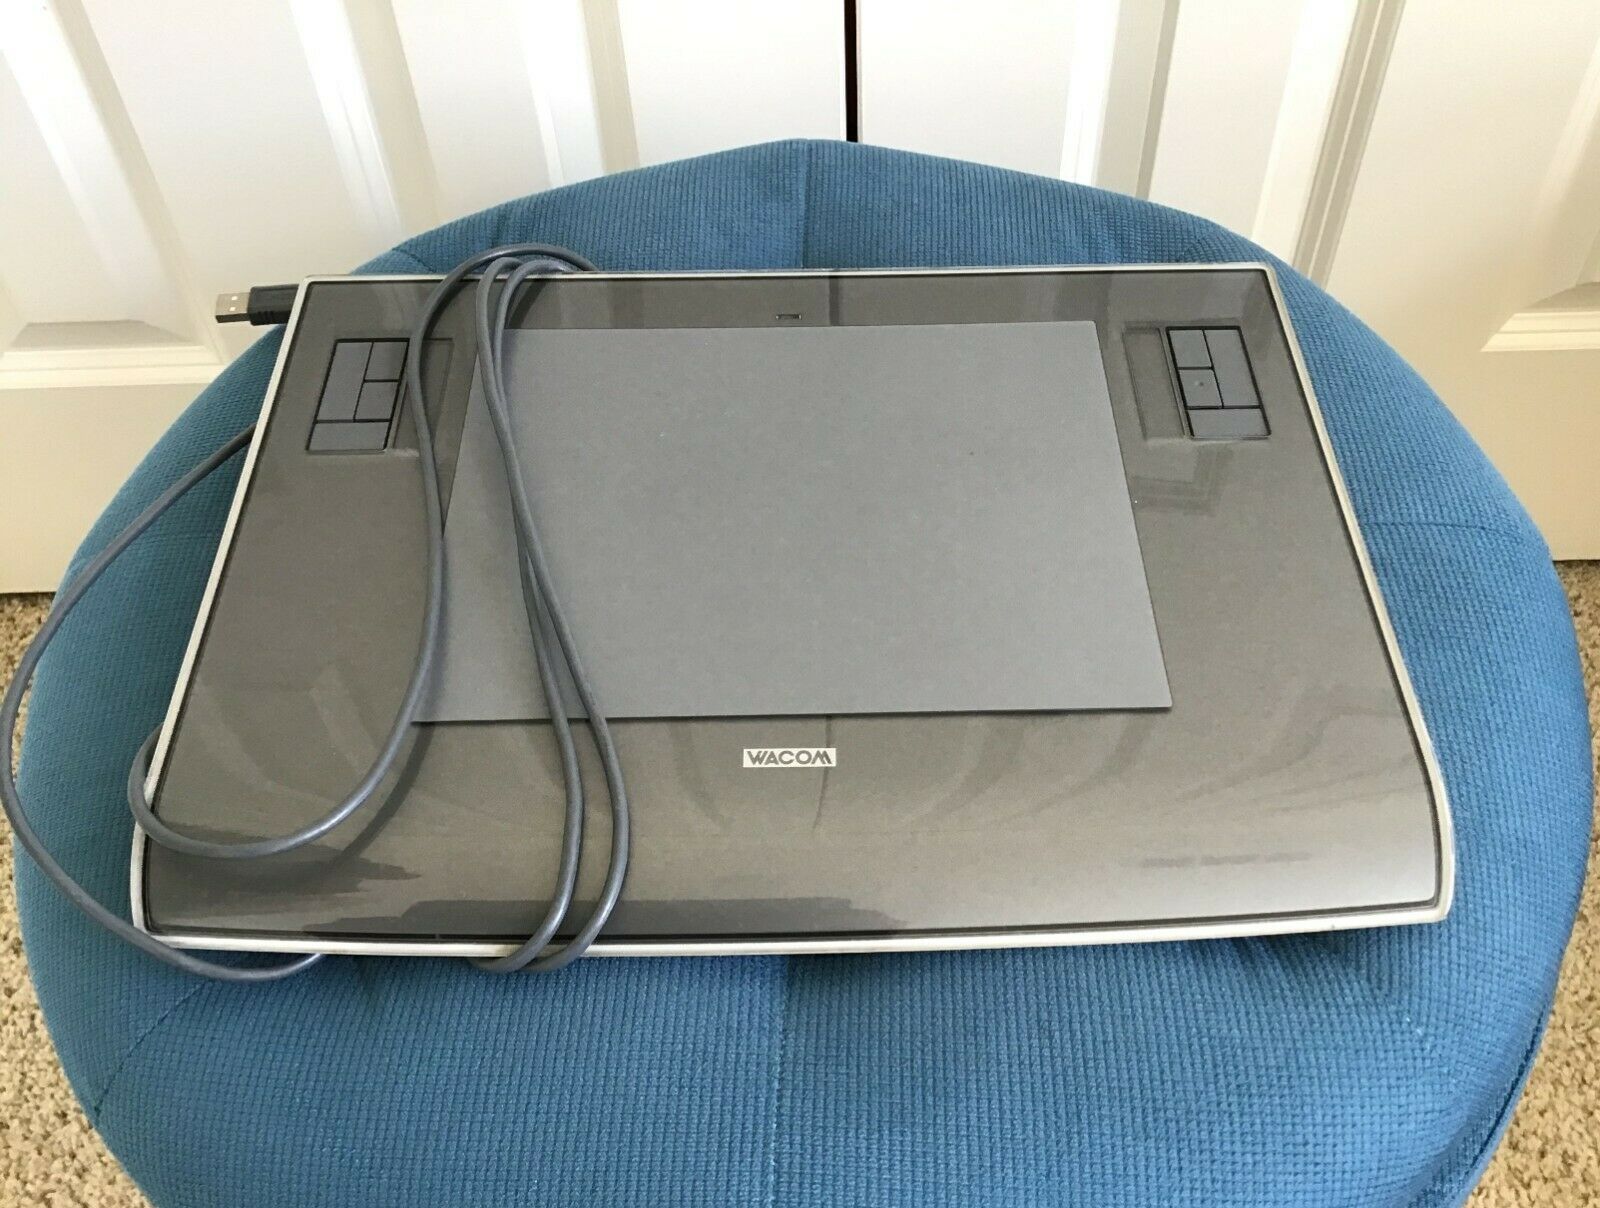 Wacom Intuos 3 PTZ-630 6x8" USB Graphics Drawing Tablet